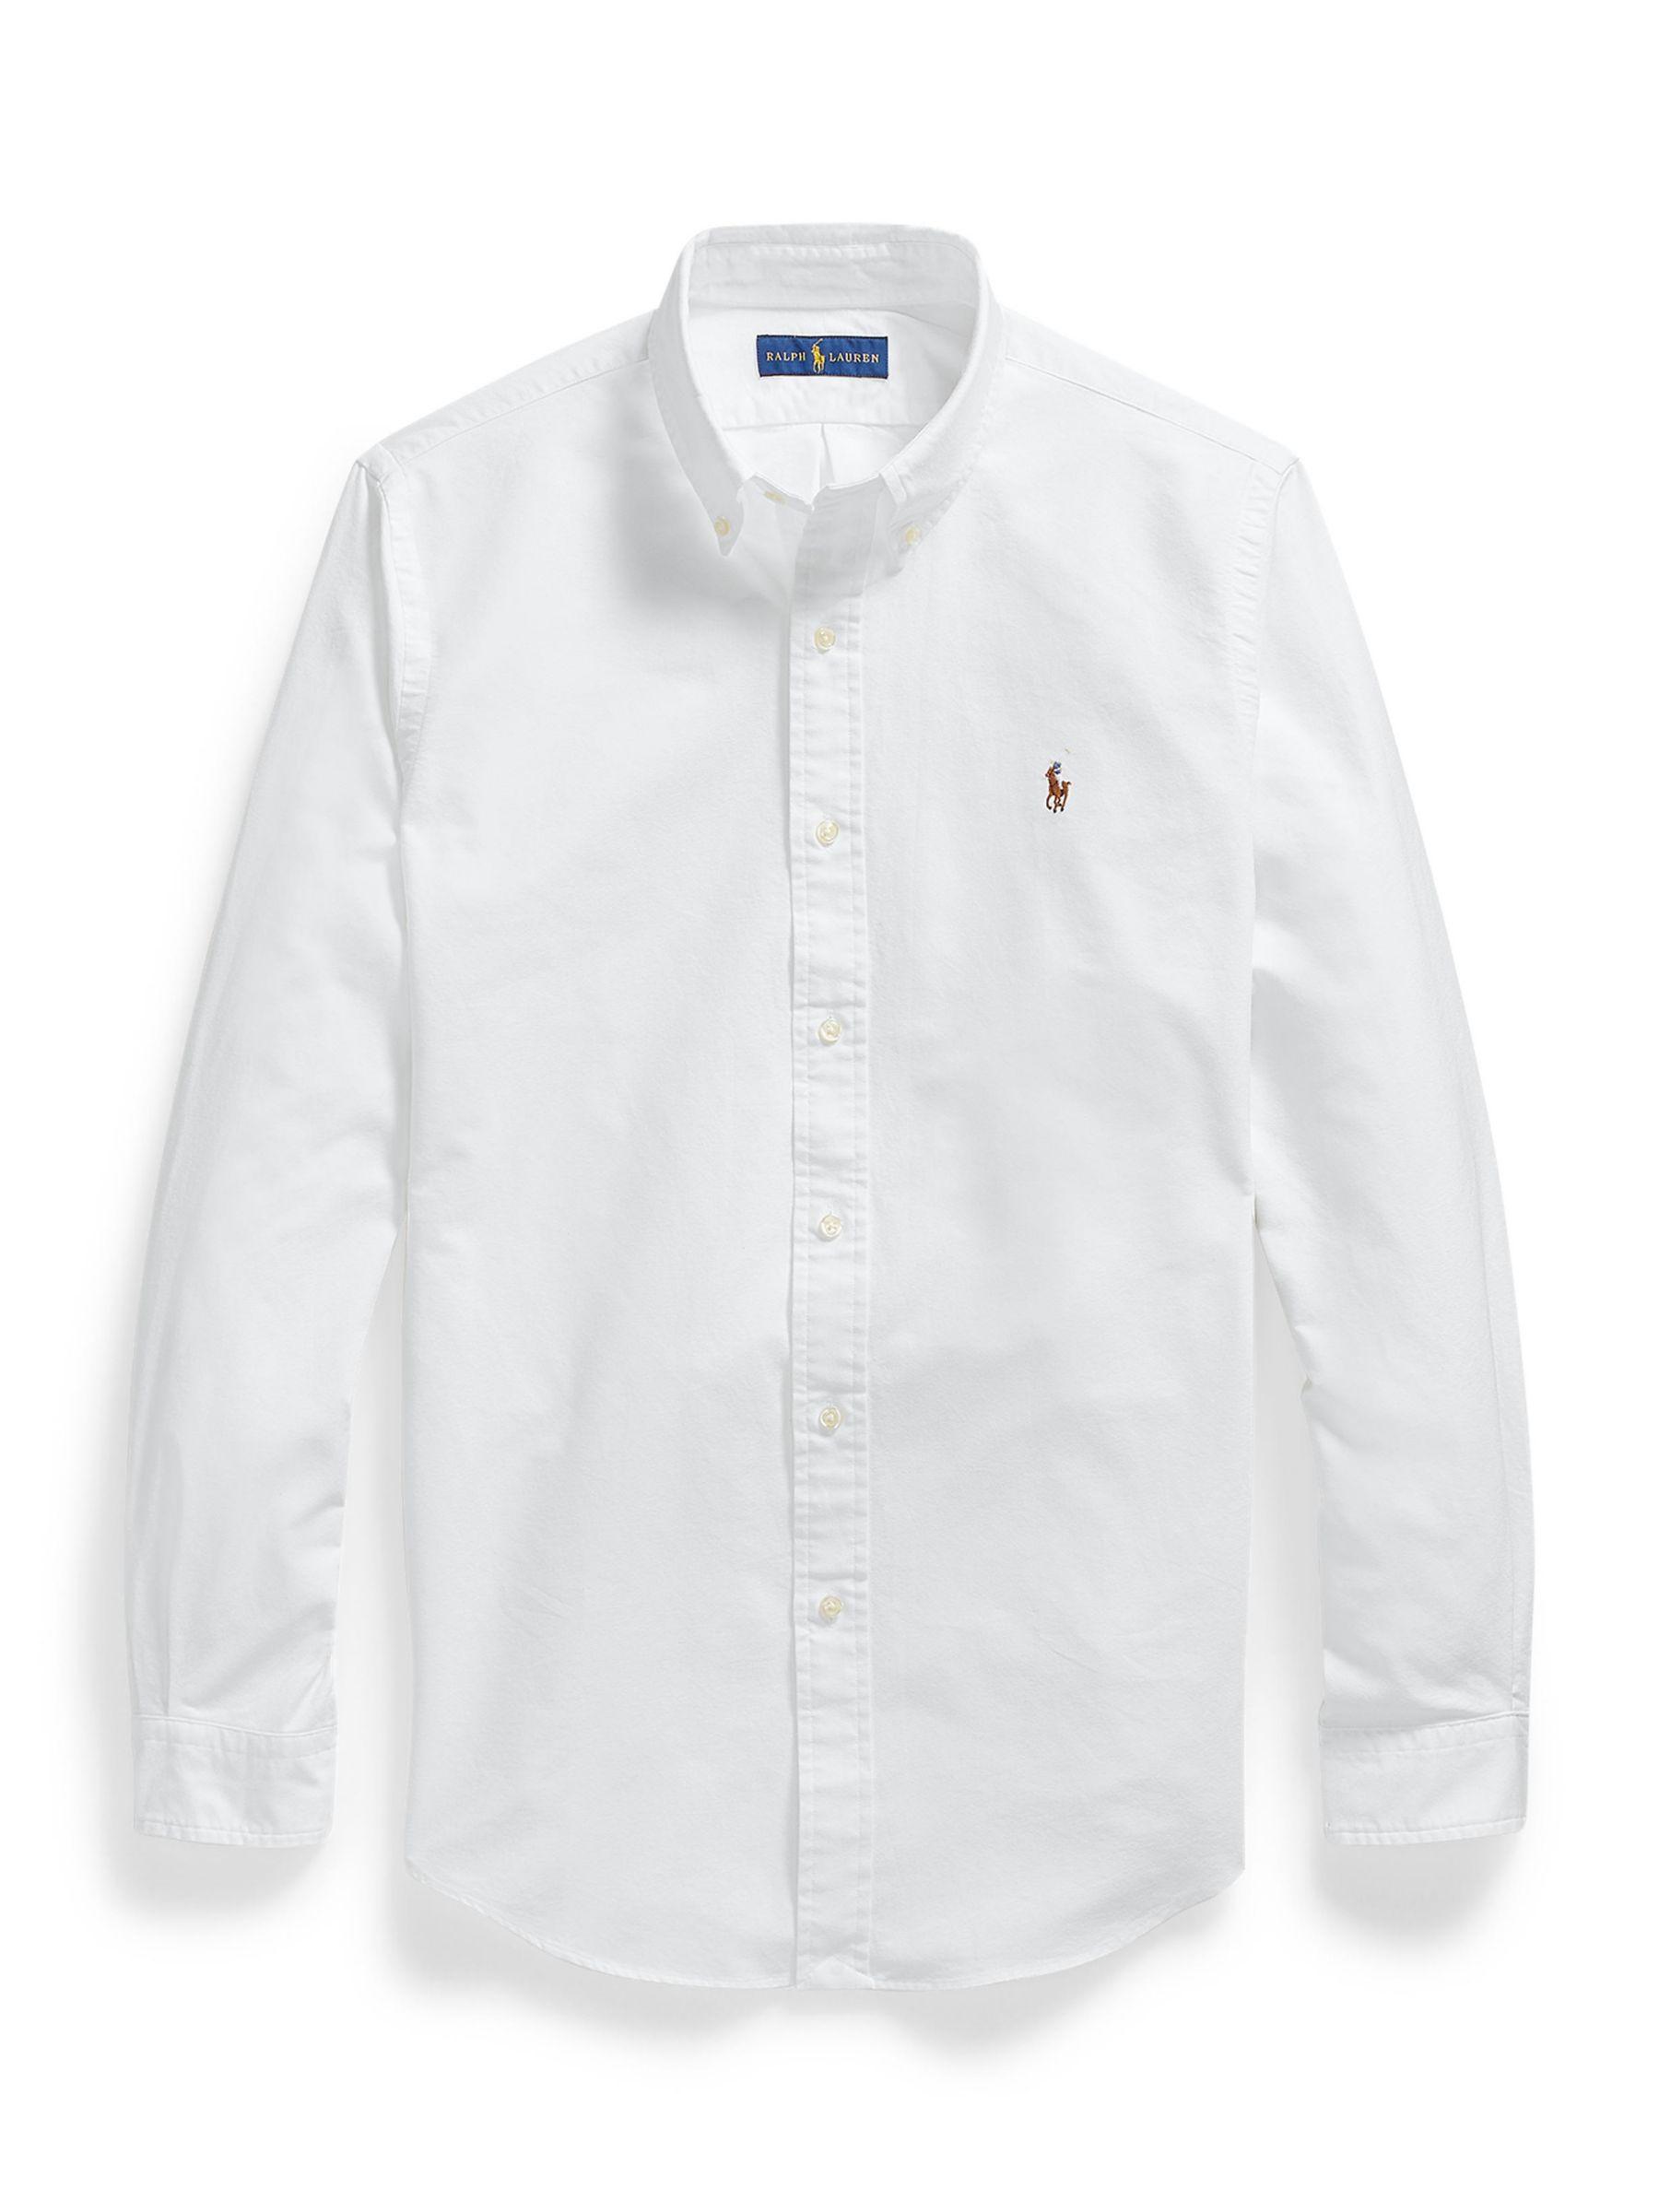 Polo Ralph Lauren Casual Oxford Sport Shirt, White at John Lewis & Partners